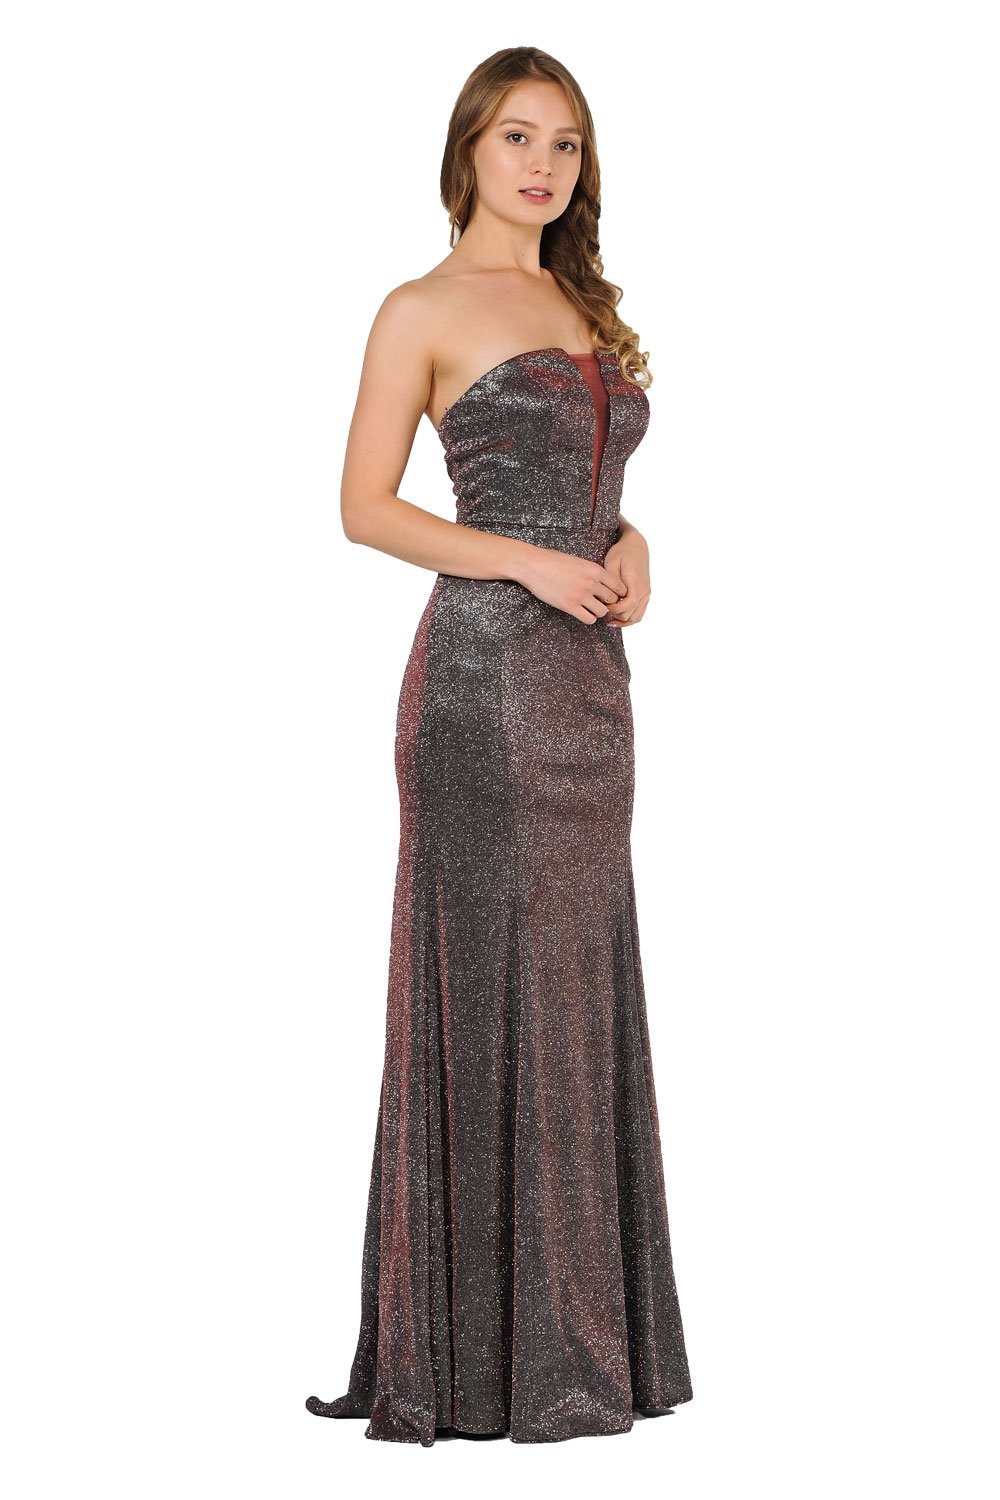 Long Strapless Metallic Glitter Dress by Poly USA 8490-Long Formal Dresses-ABC Fashion